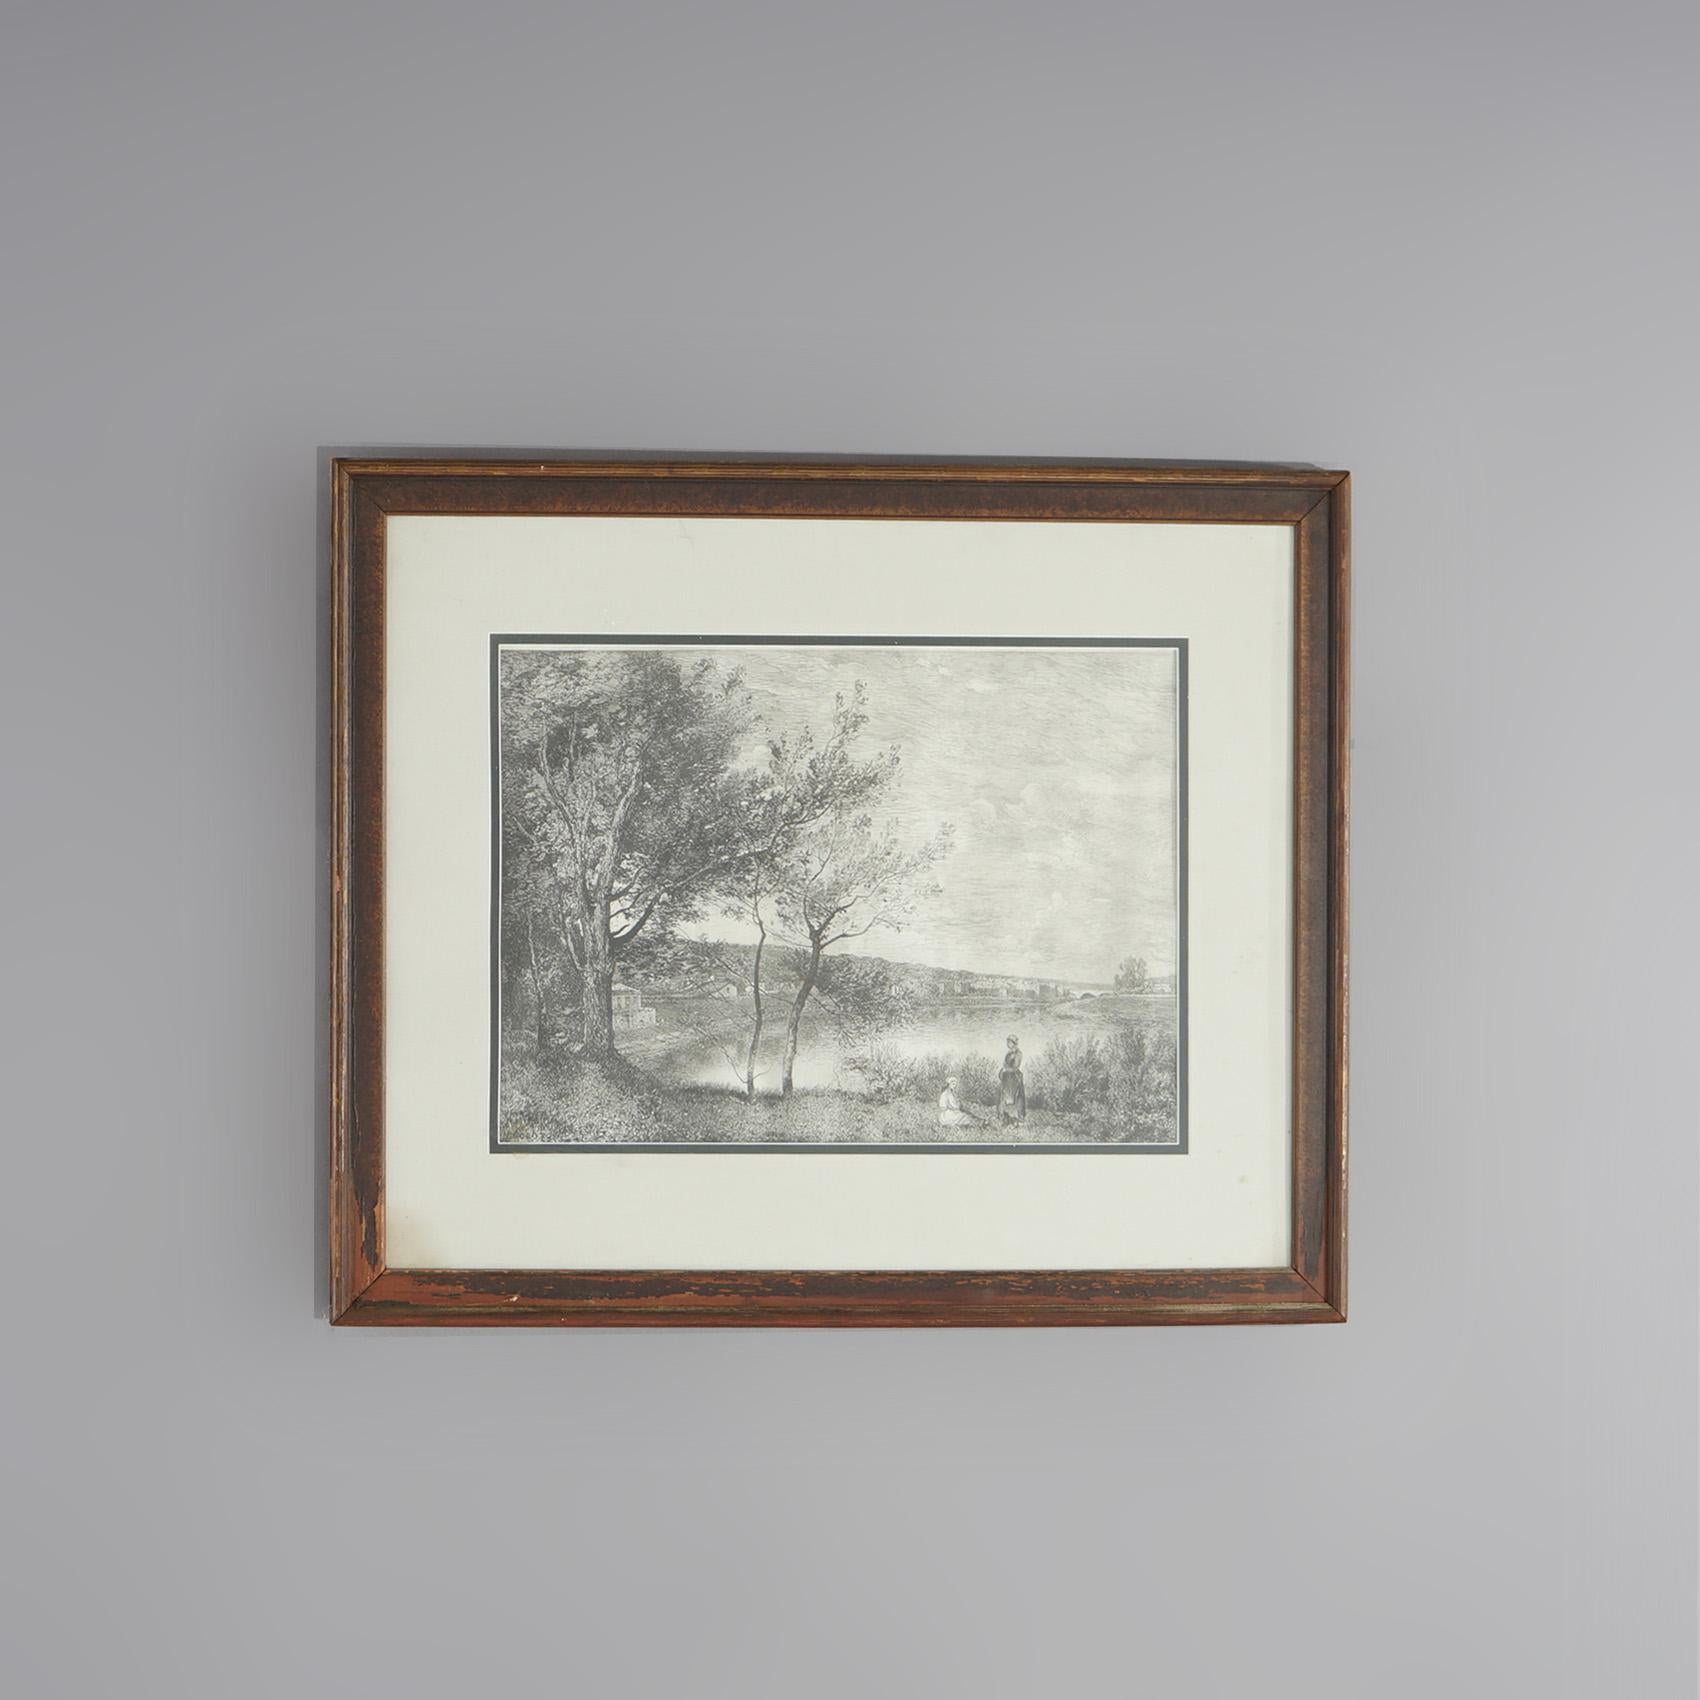 Framed Print, Copy after Corot French Impressionist La Sepia Landscape,  20th C

Measures - 23